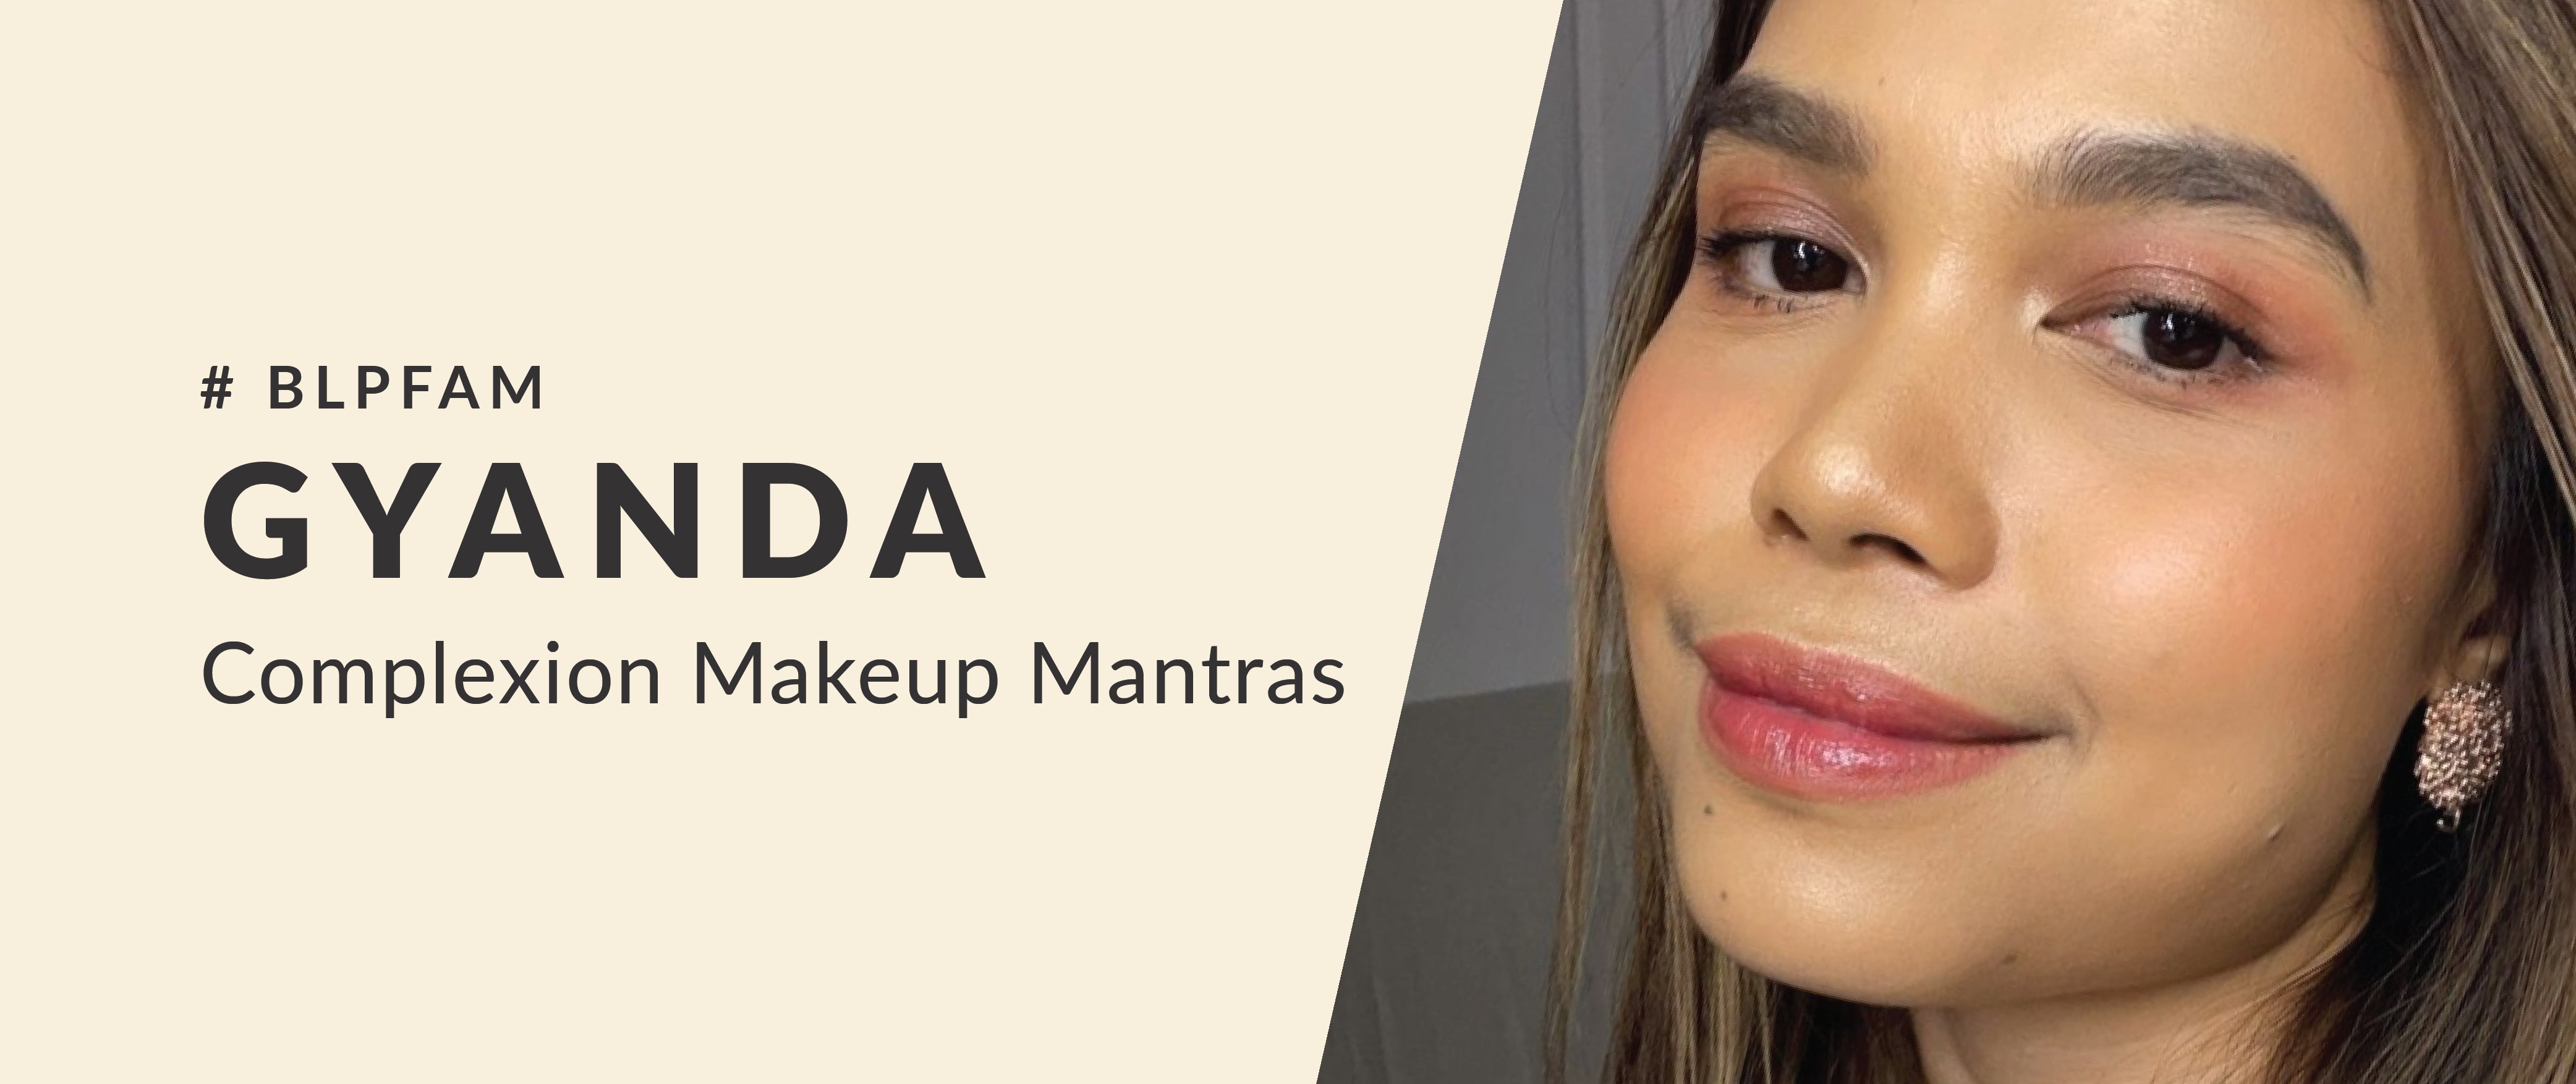 BLPFAM GYANDA, Complexion Makeup Mantras